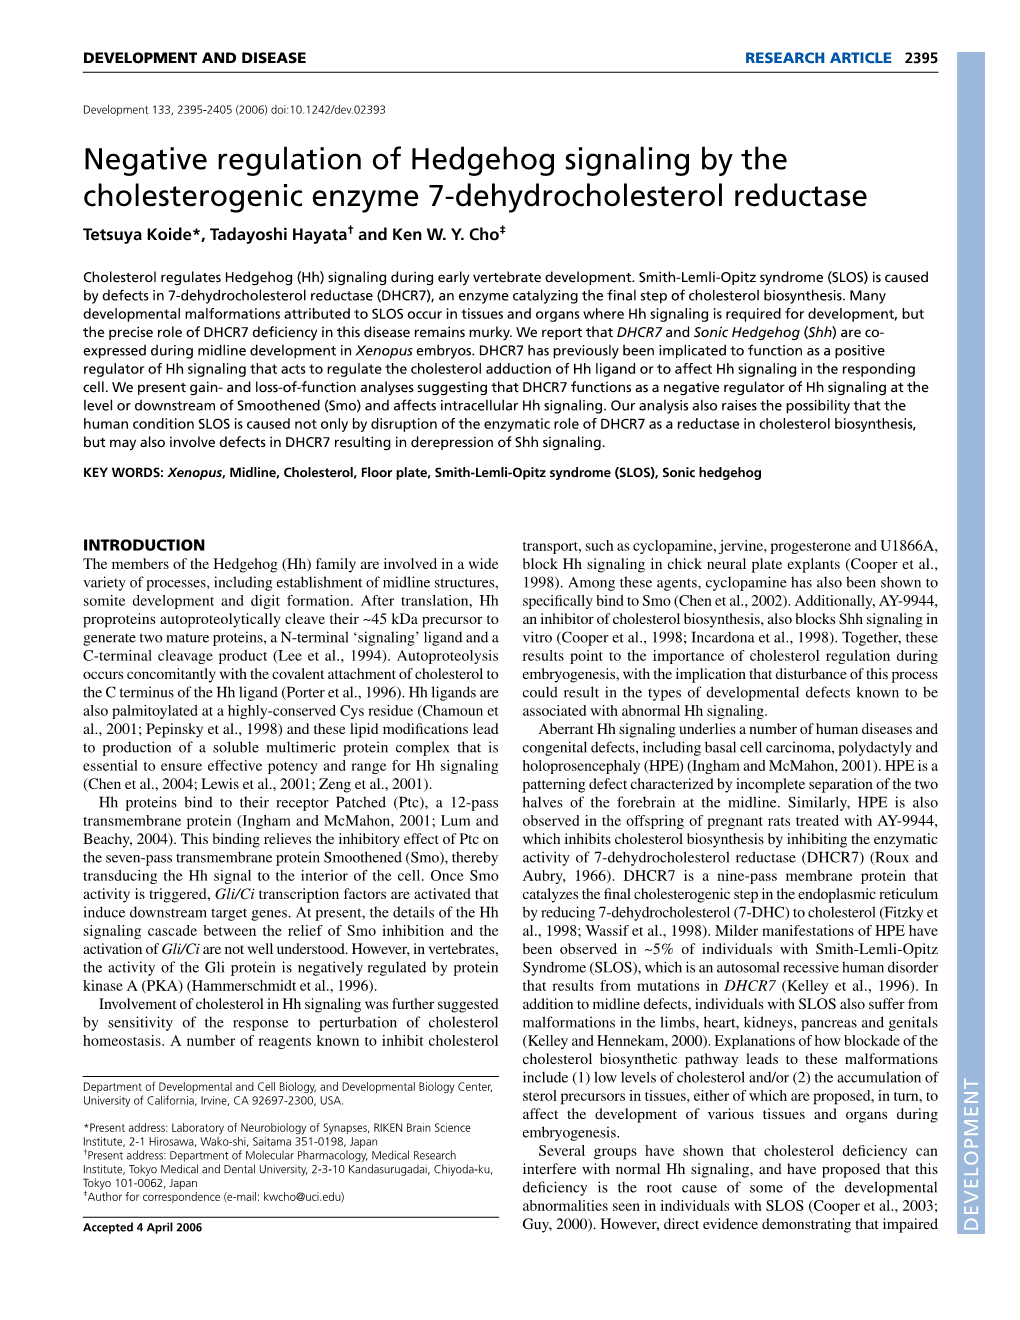 Negative Regulation of Hedgehog Signaling by the Cholesterogenic